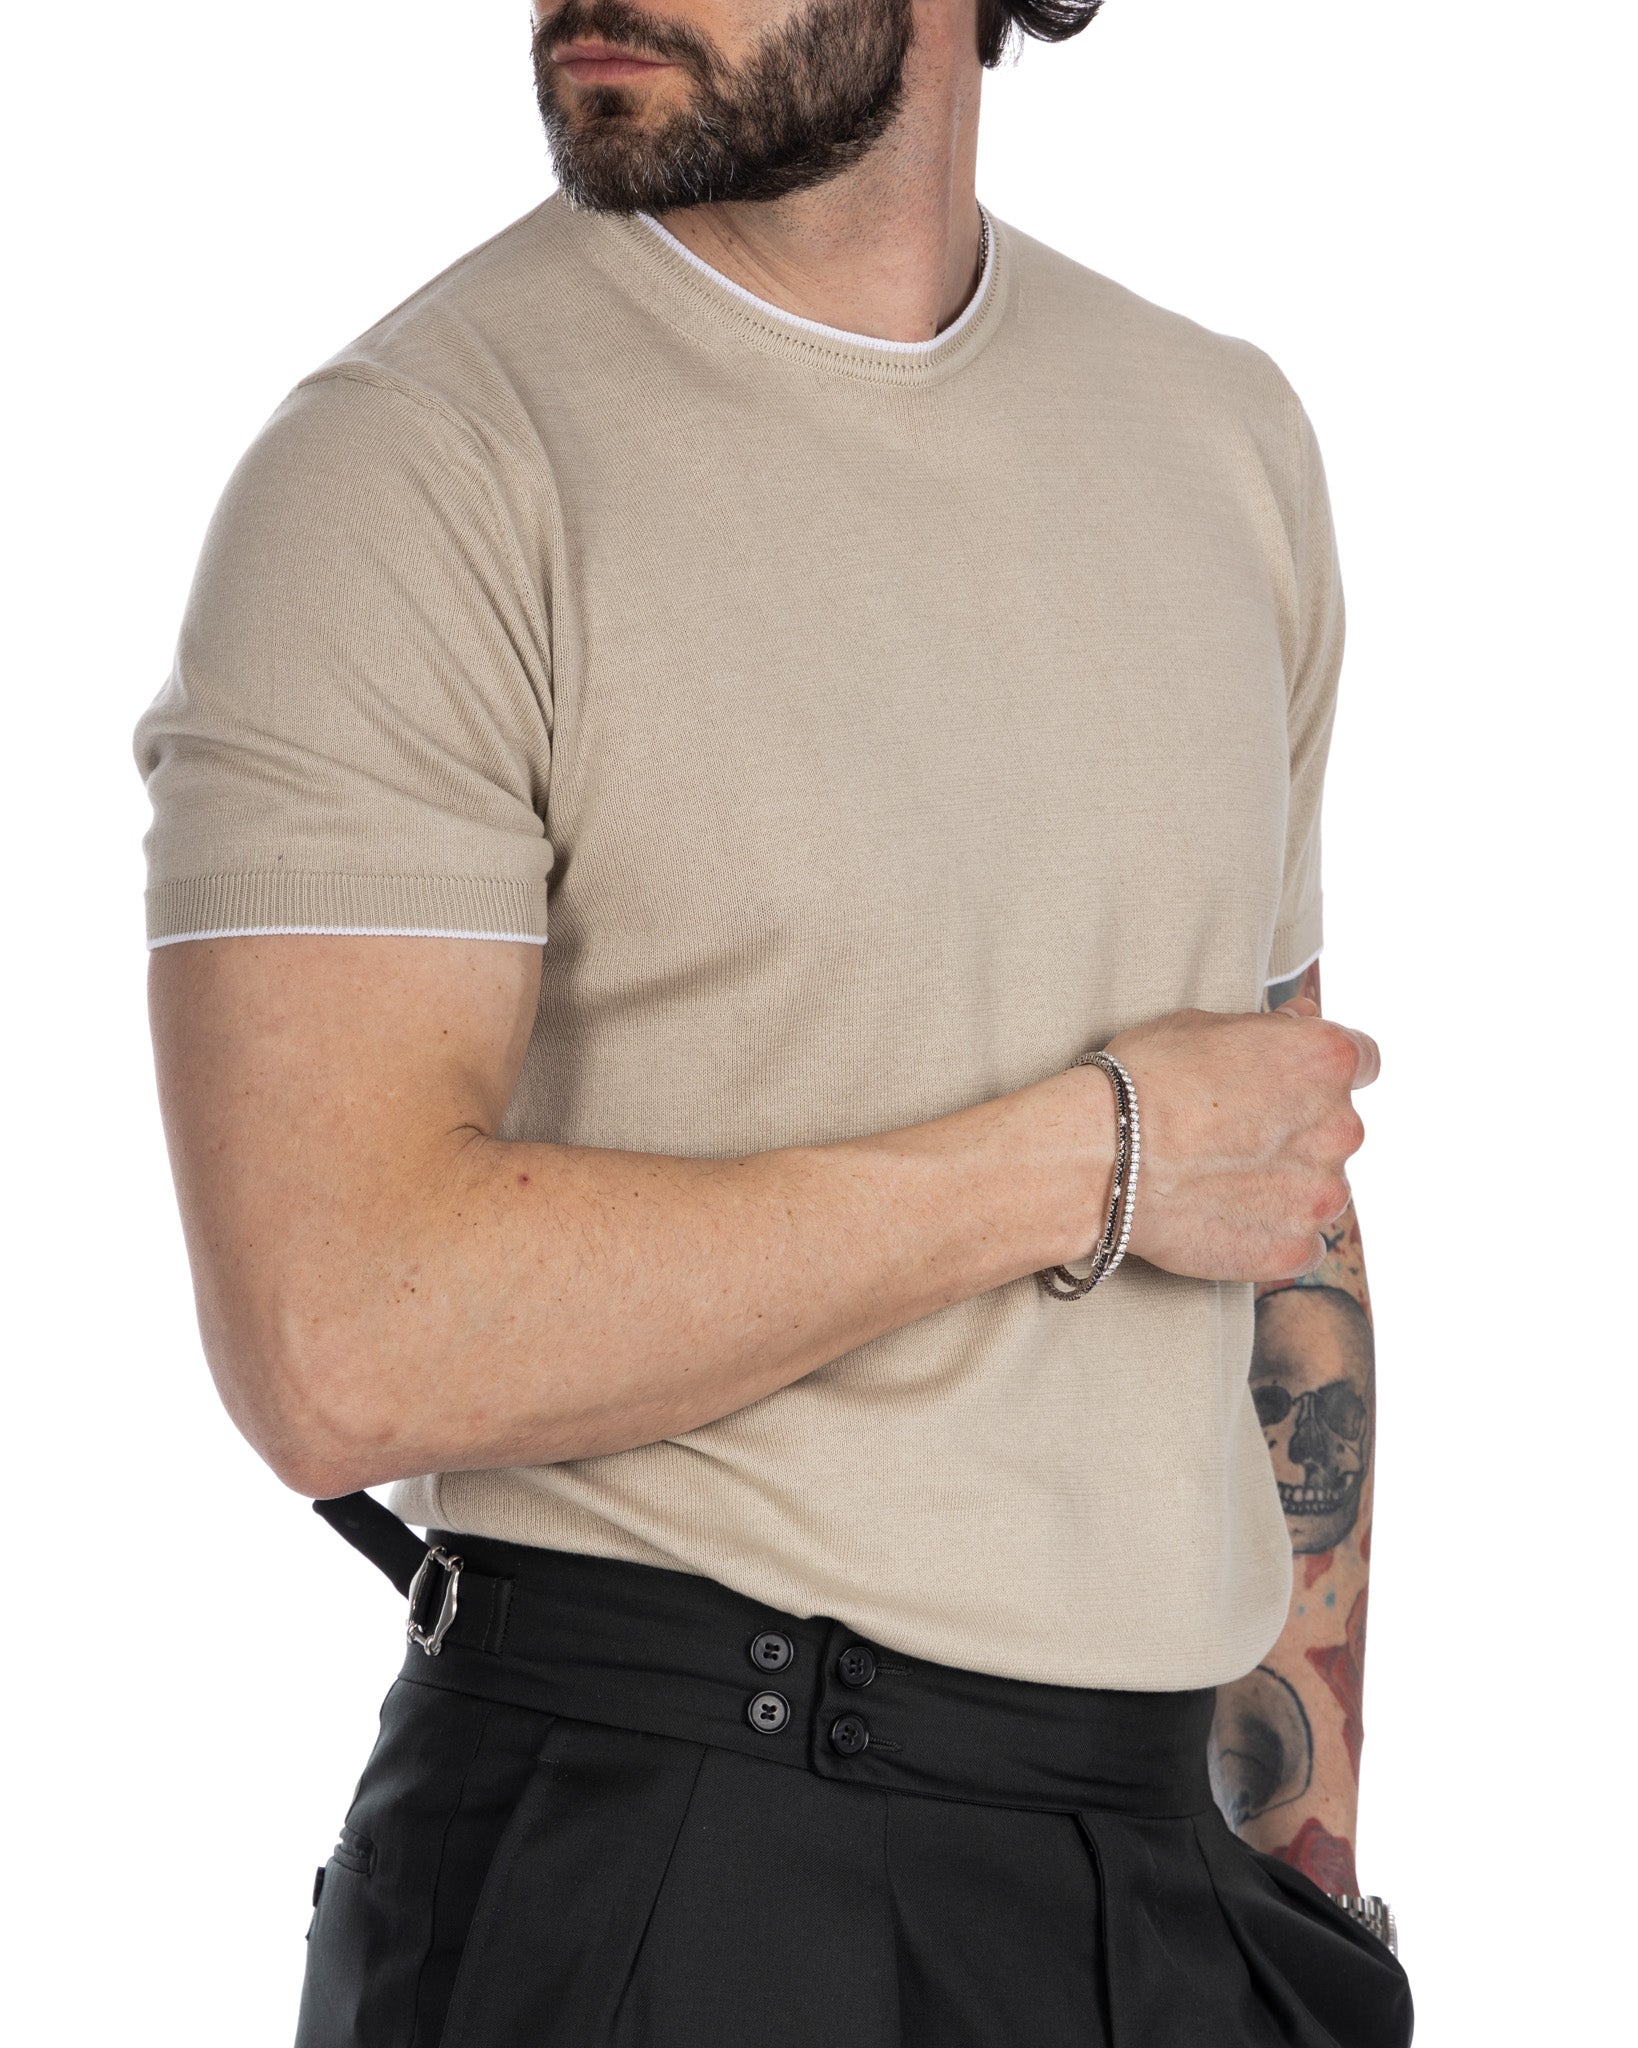 Holger - t-shirt beige a maglia con contrasto